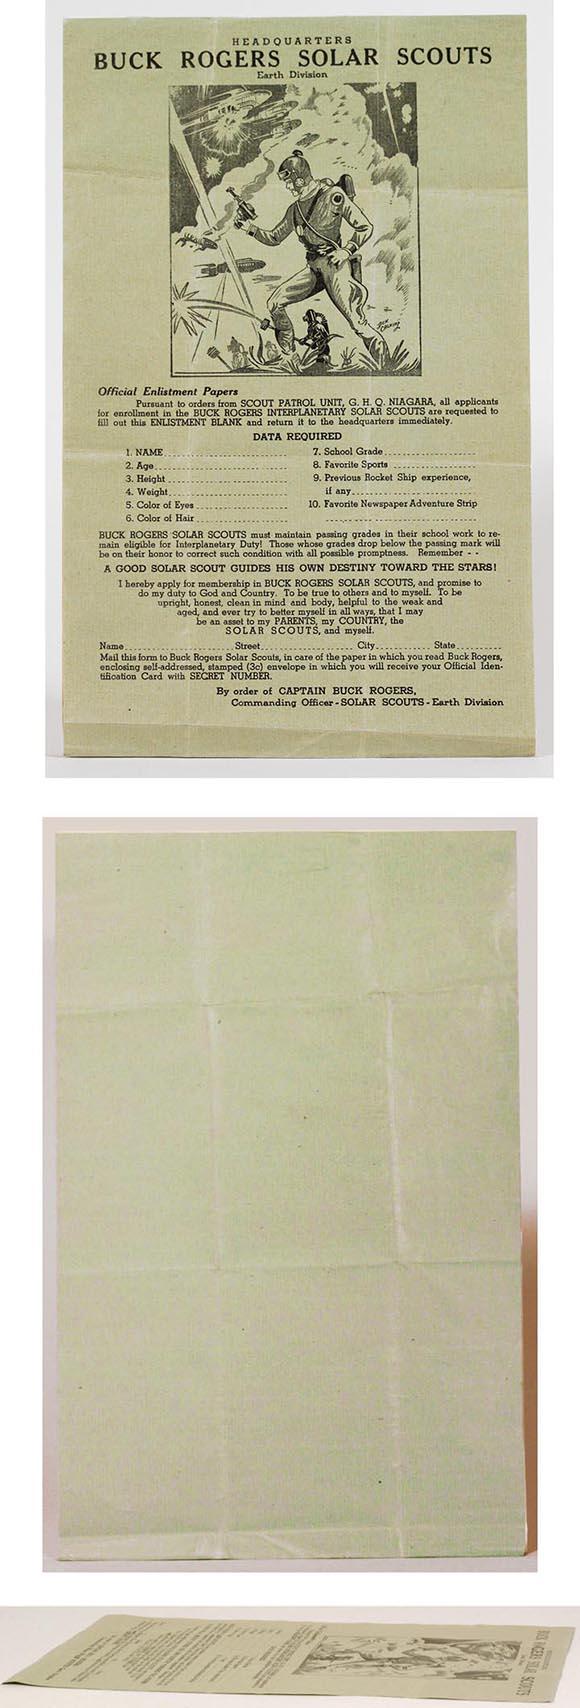 1939 Buck Rogers Solar Scouts Enlistment Form